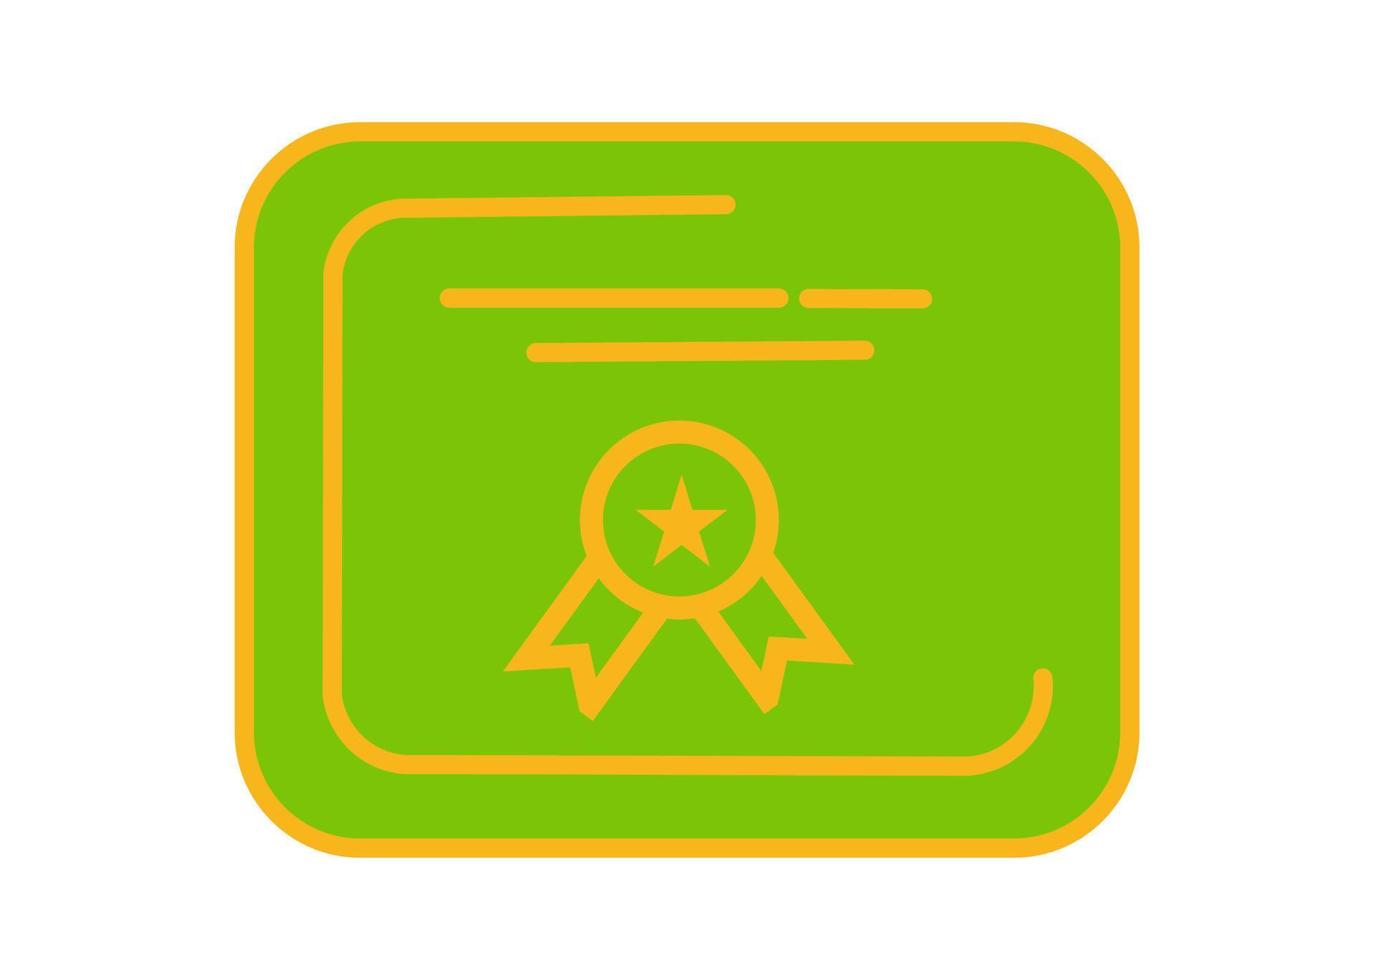 award certificate form vector, icon or symbol design vector